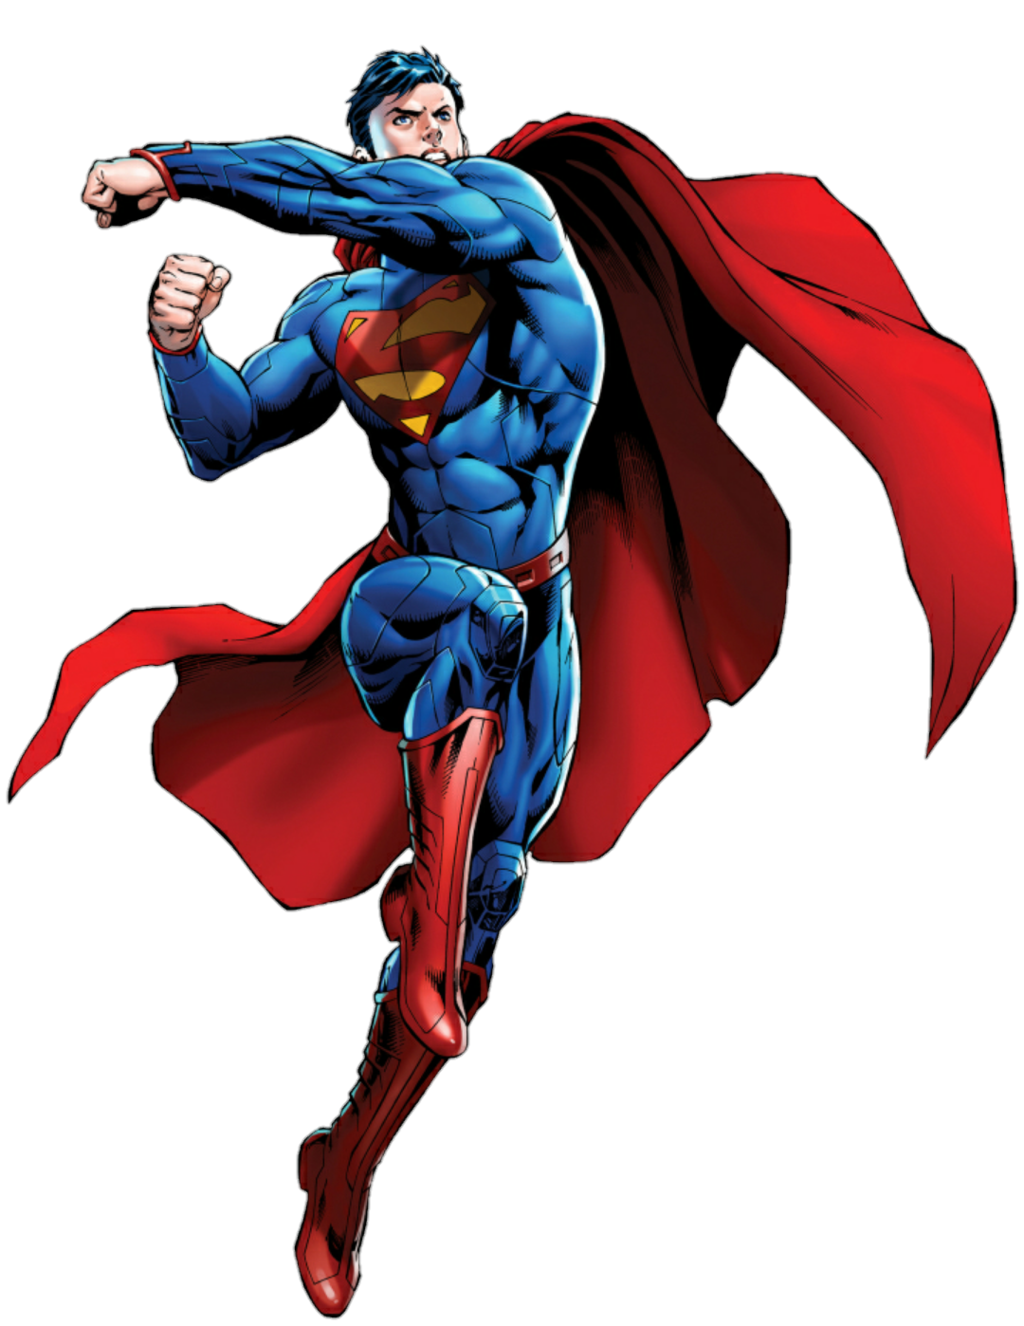 Superman Image PNG Image